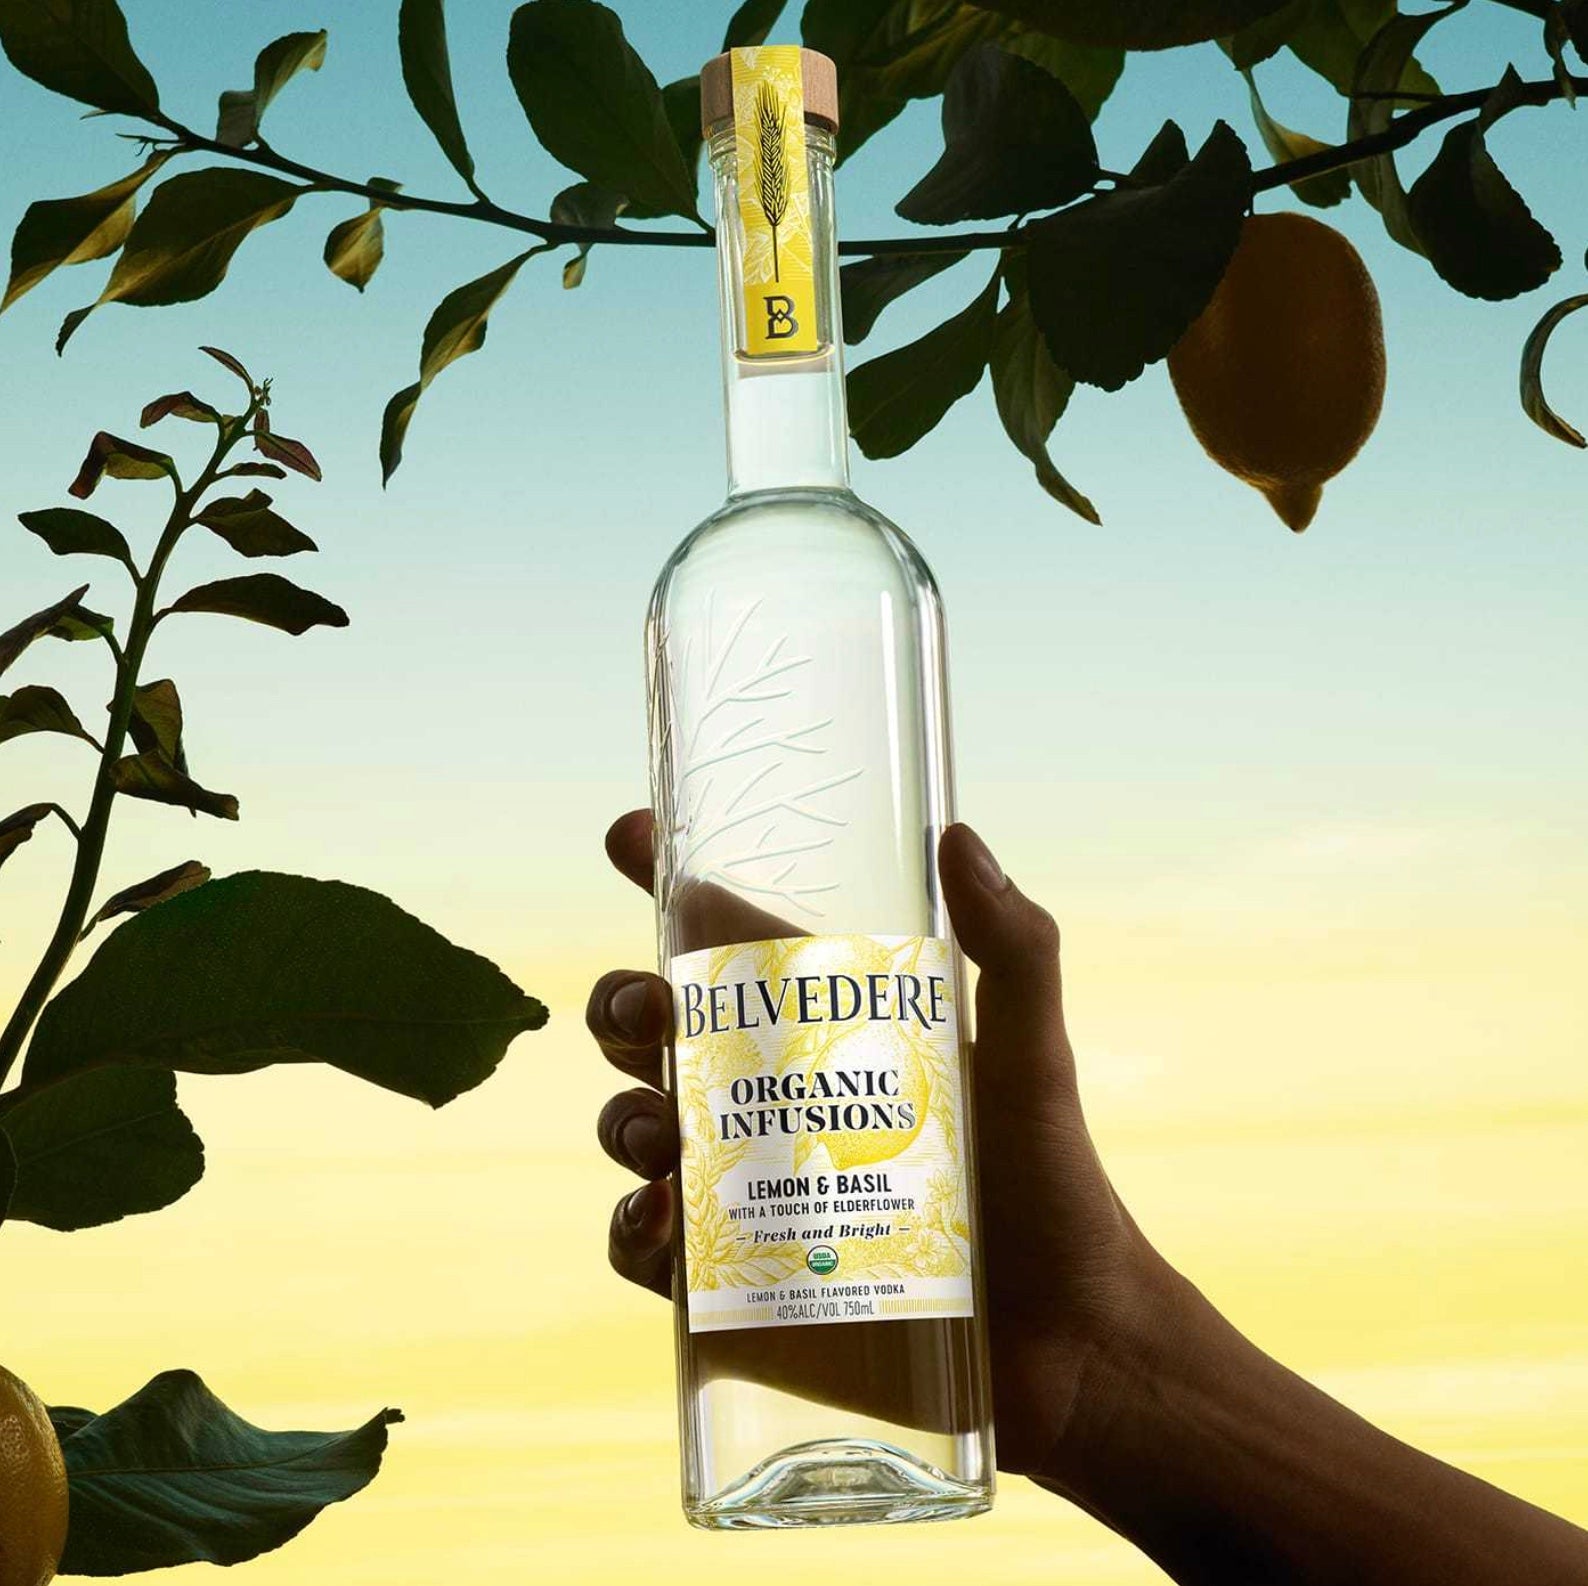 Belvedere Organic Infusions - Blackberry Lemongrass Vodka (750ml)